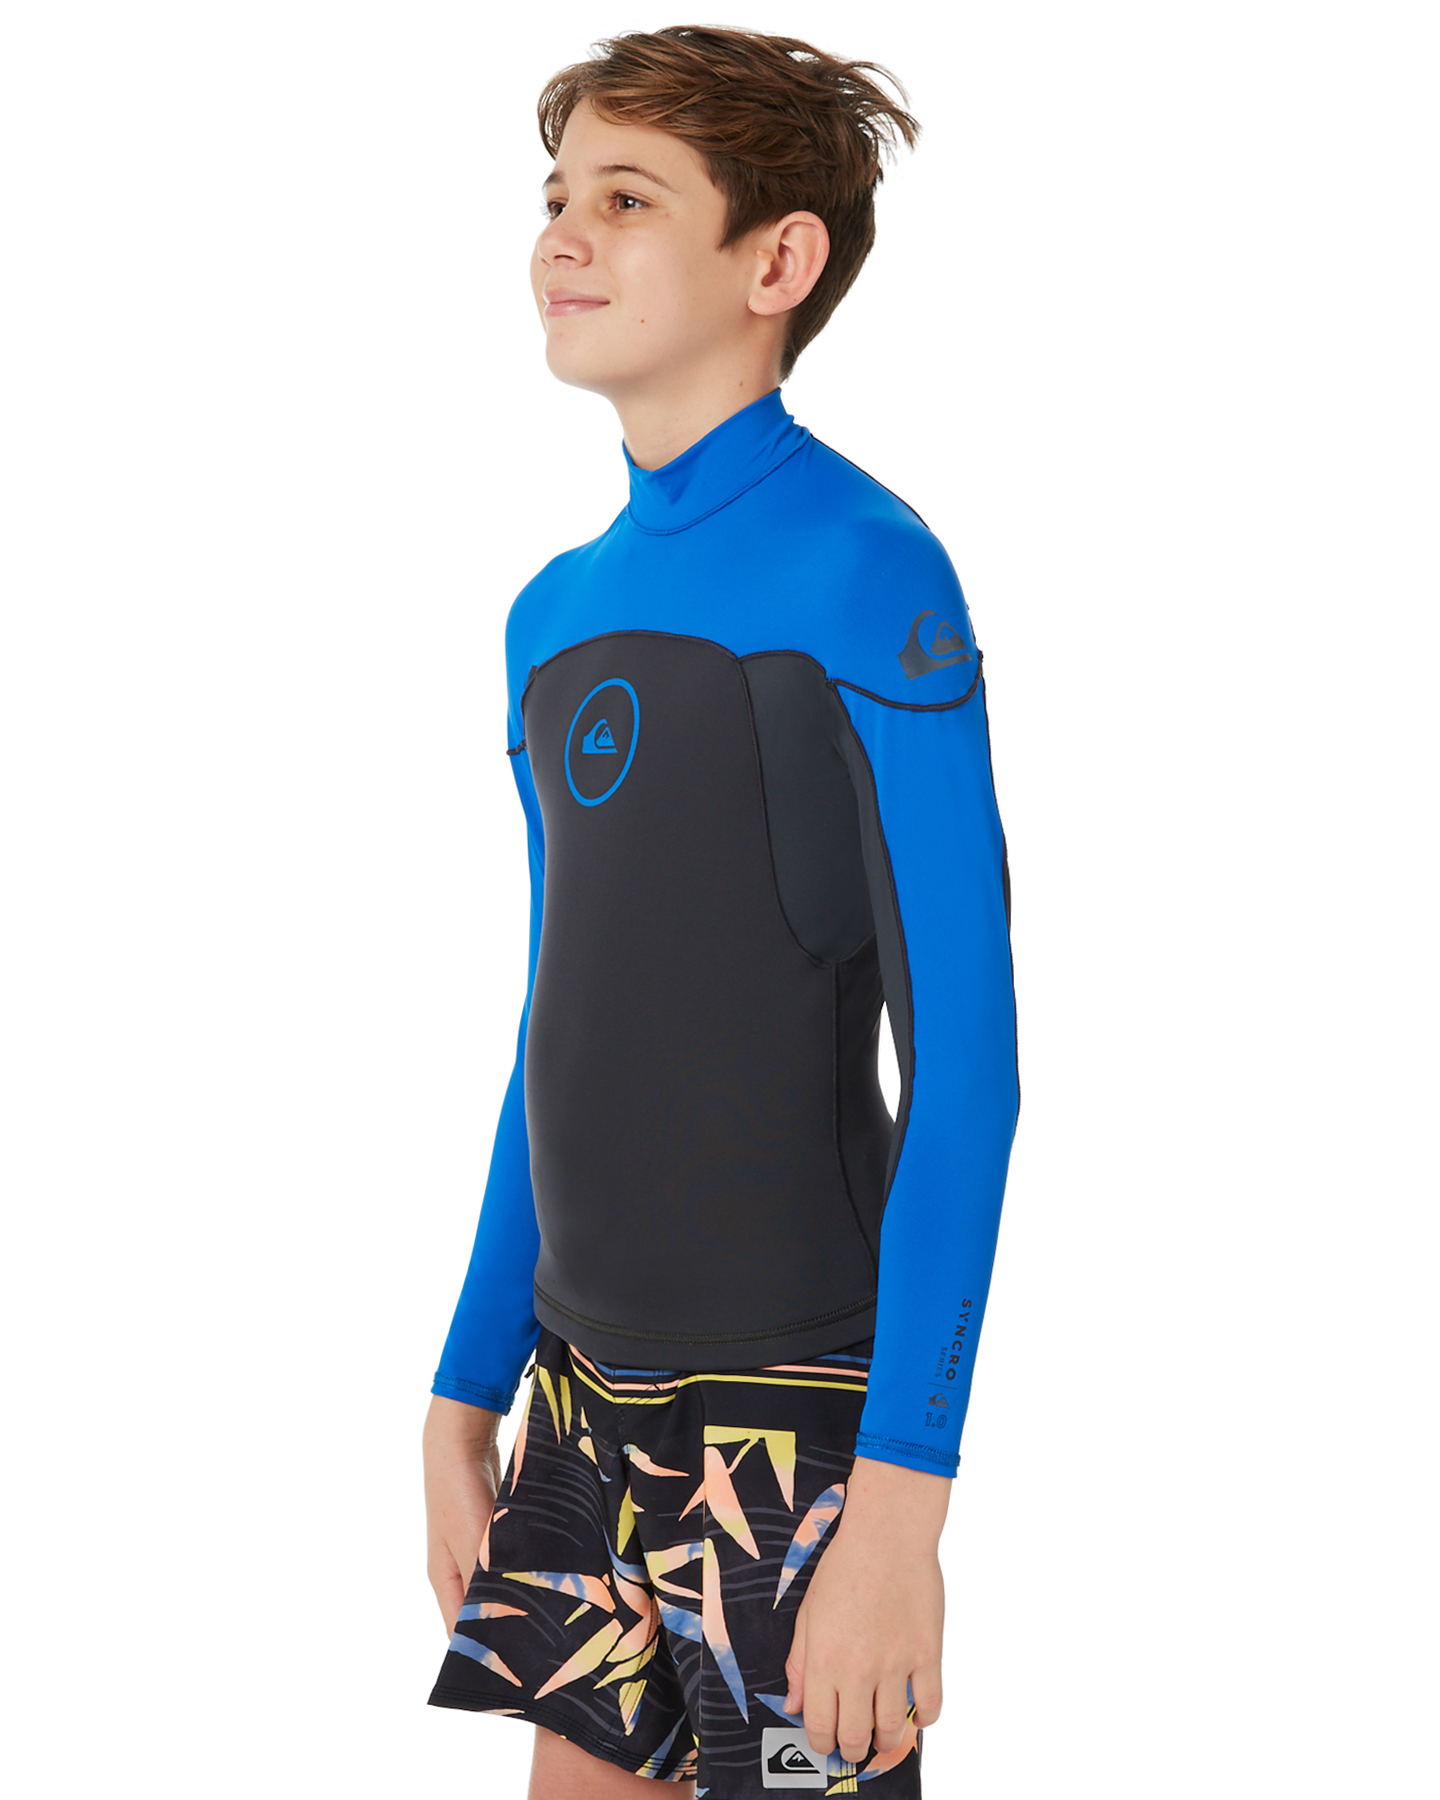 Quiksilver Boys 1Mm Syncro Series Neoshirt Wetsuit Jacket - Graphite ...